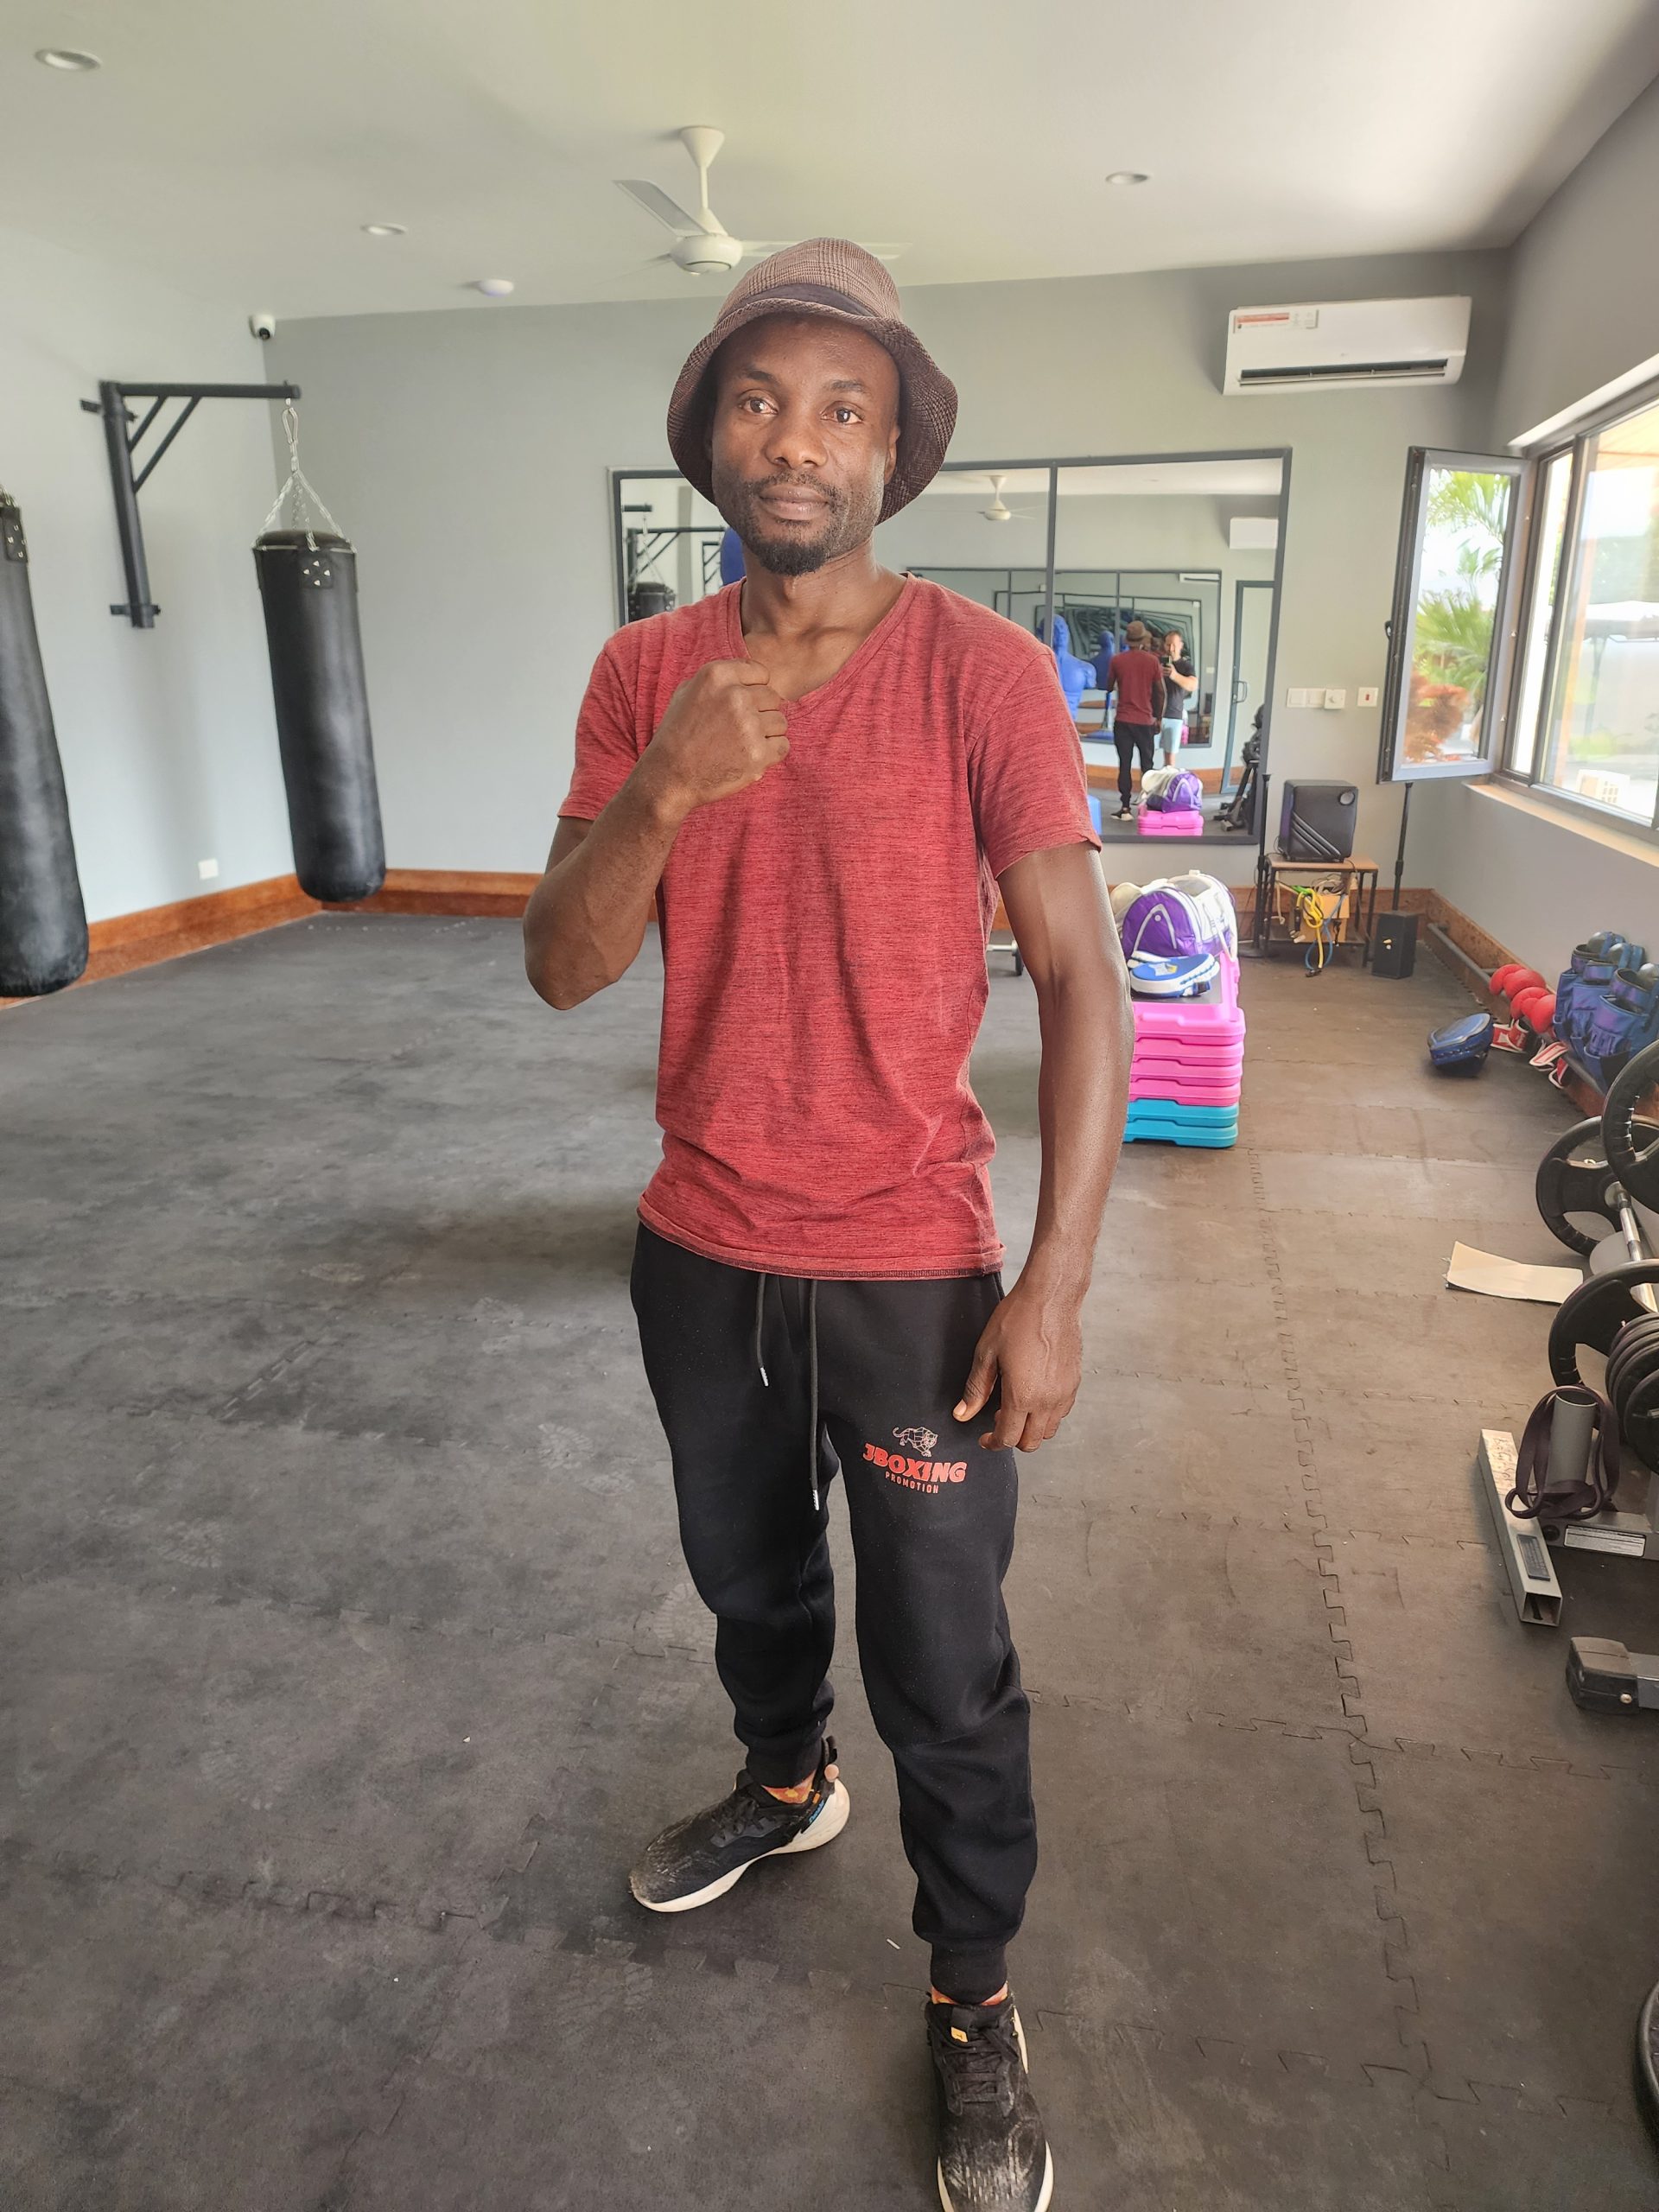 The Bali Zanzibar Resort supports the local Tanzanian boxers to train in a fantastic environment